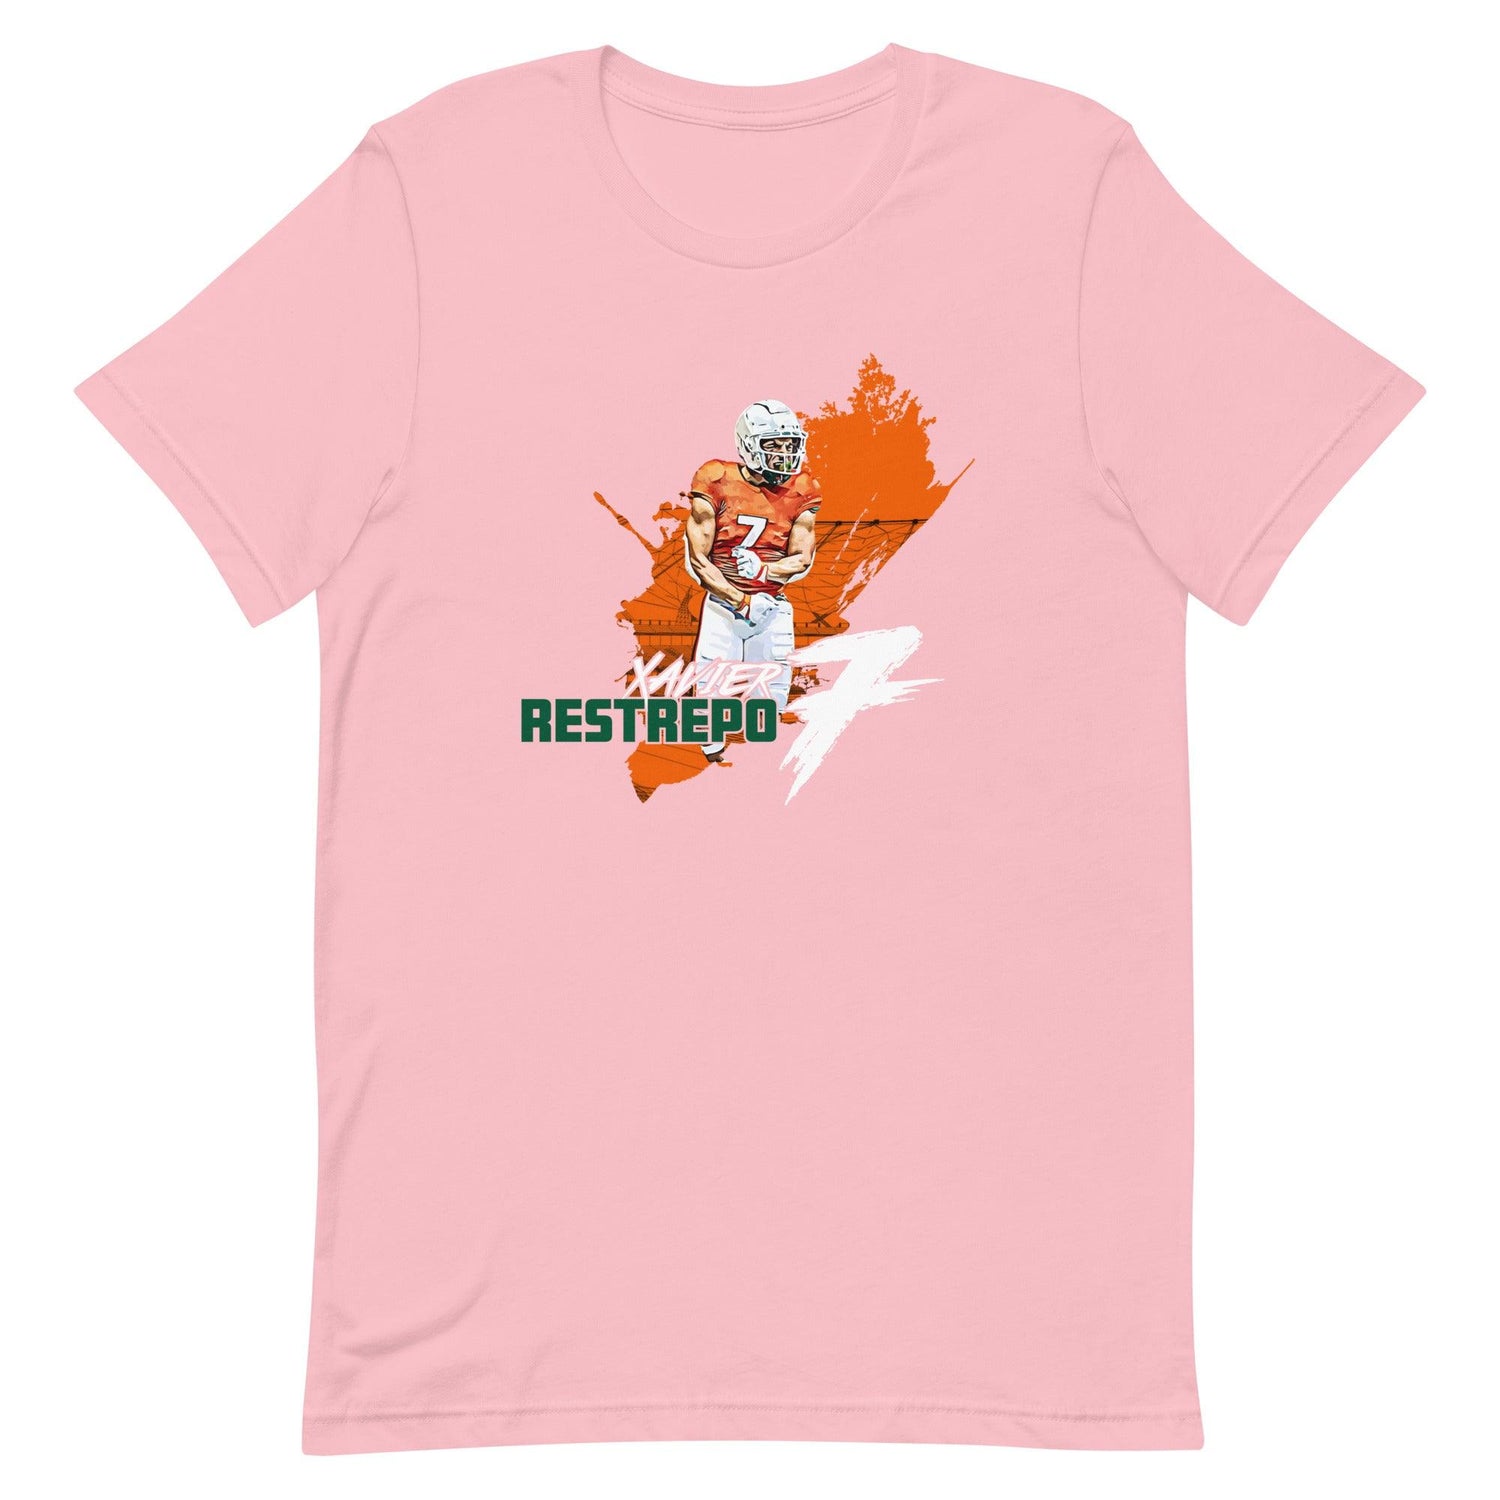 Xavier Restrepo "Let's Go" t-shirt - Fan Arch